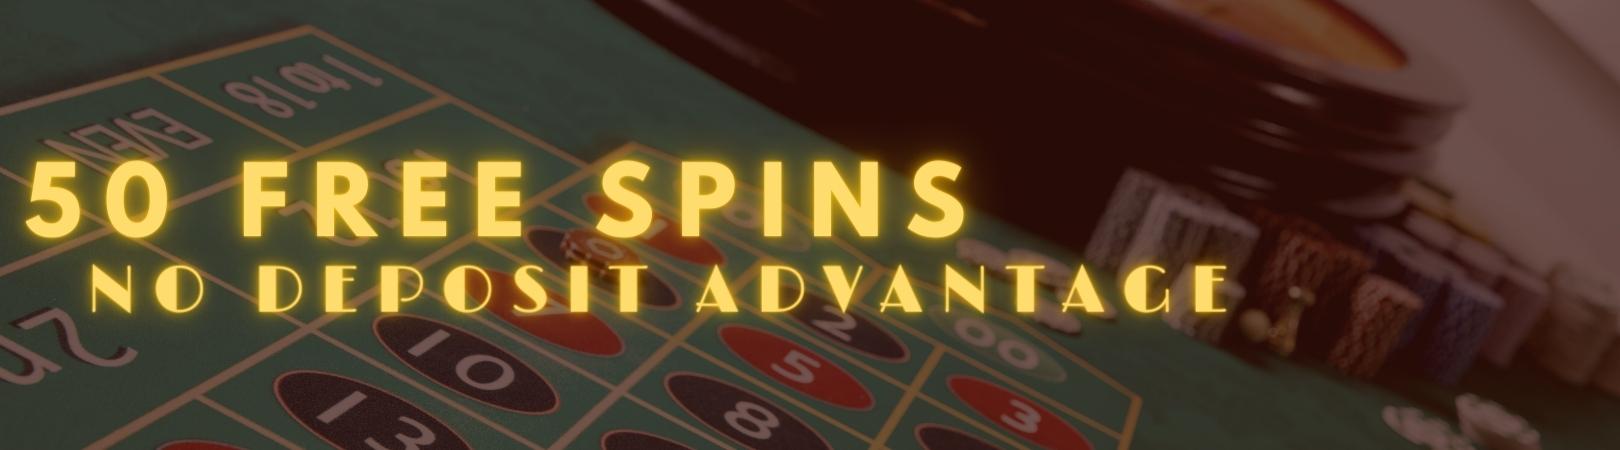 50 Free spins no deposit advantages img